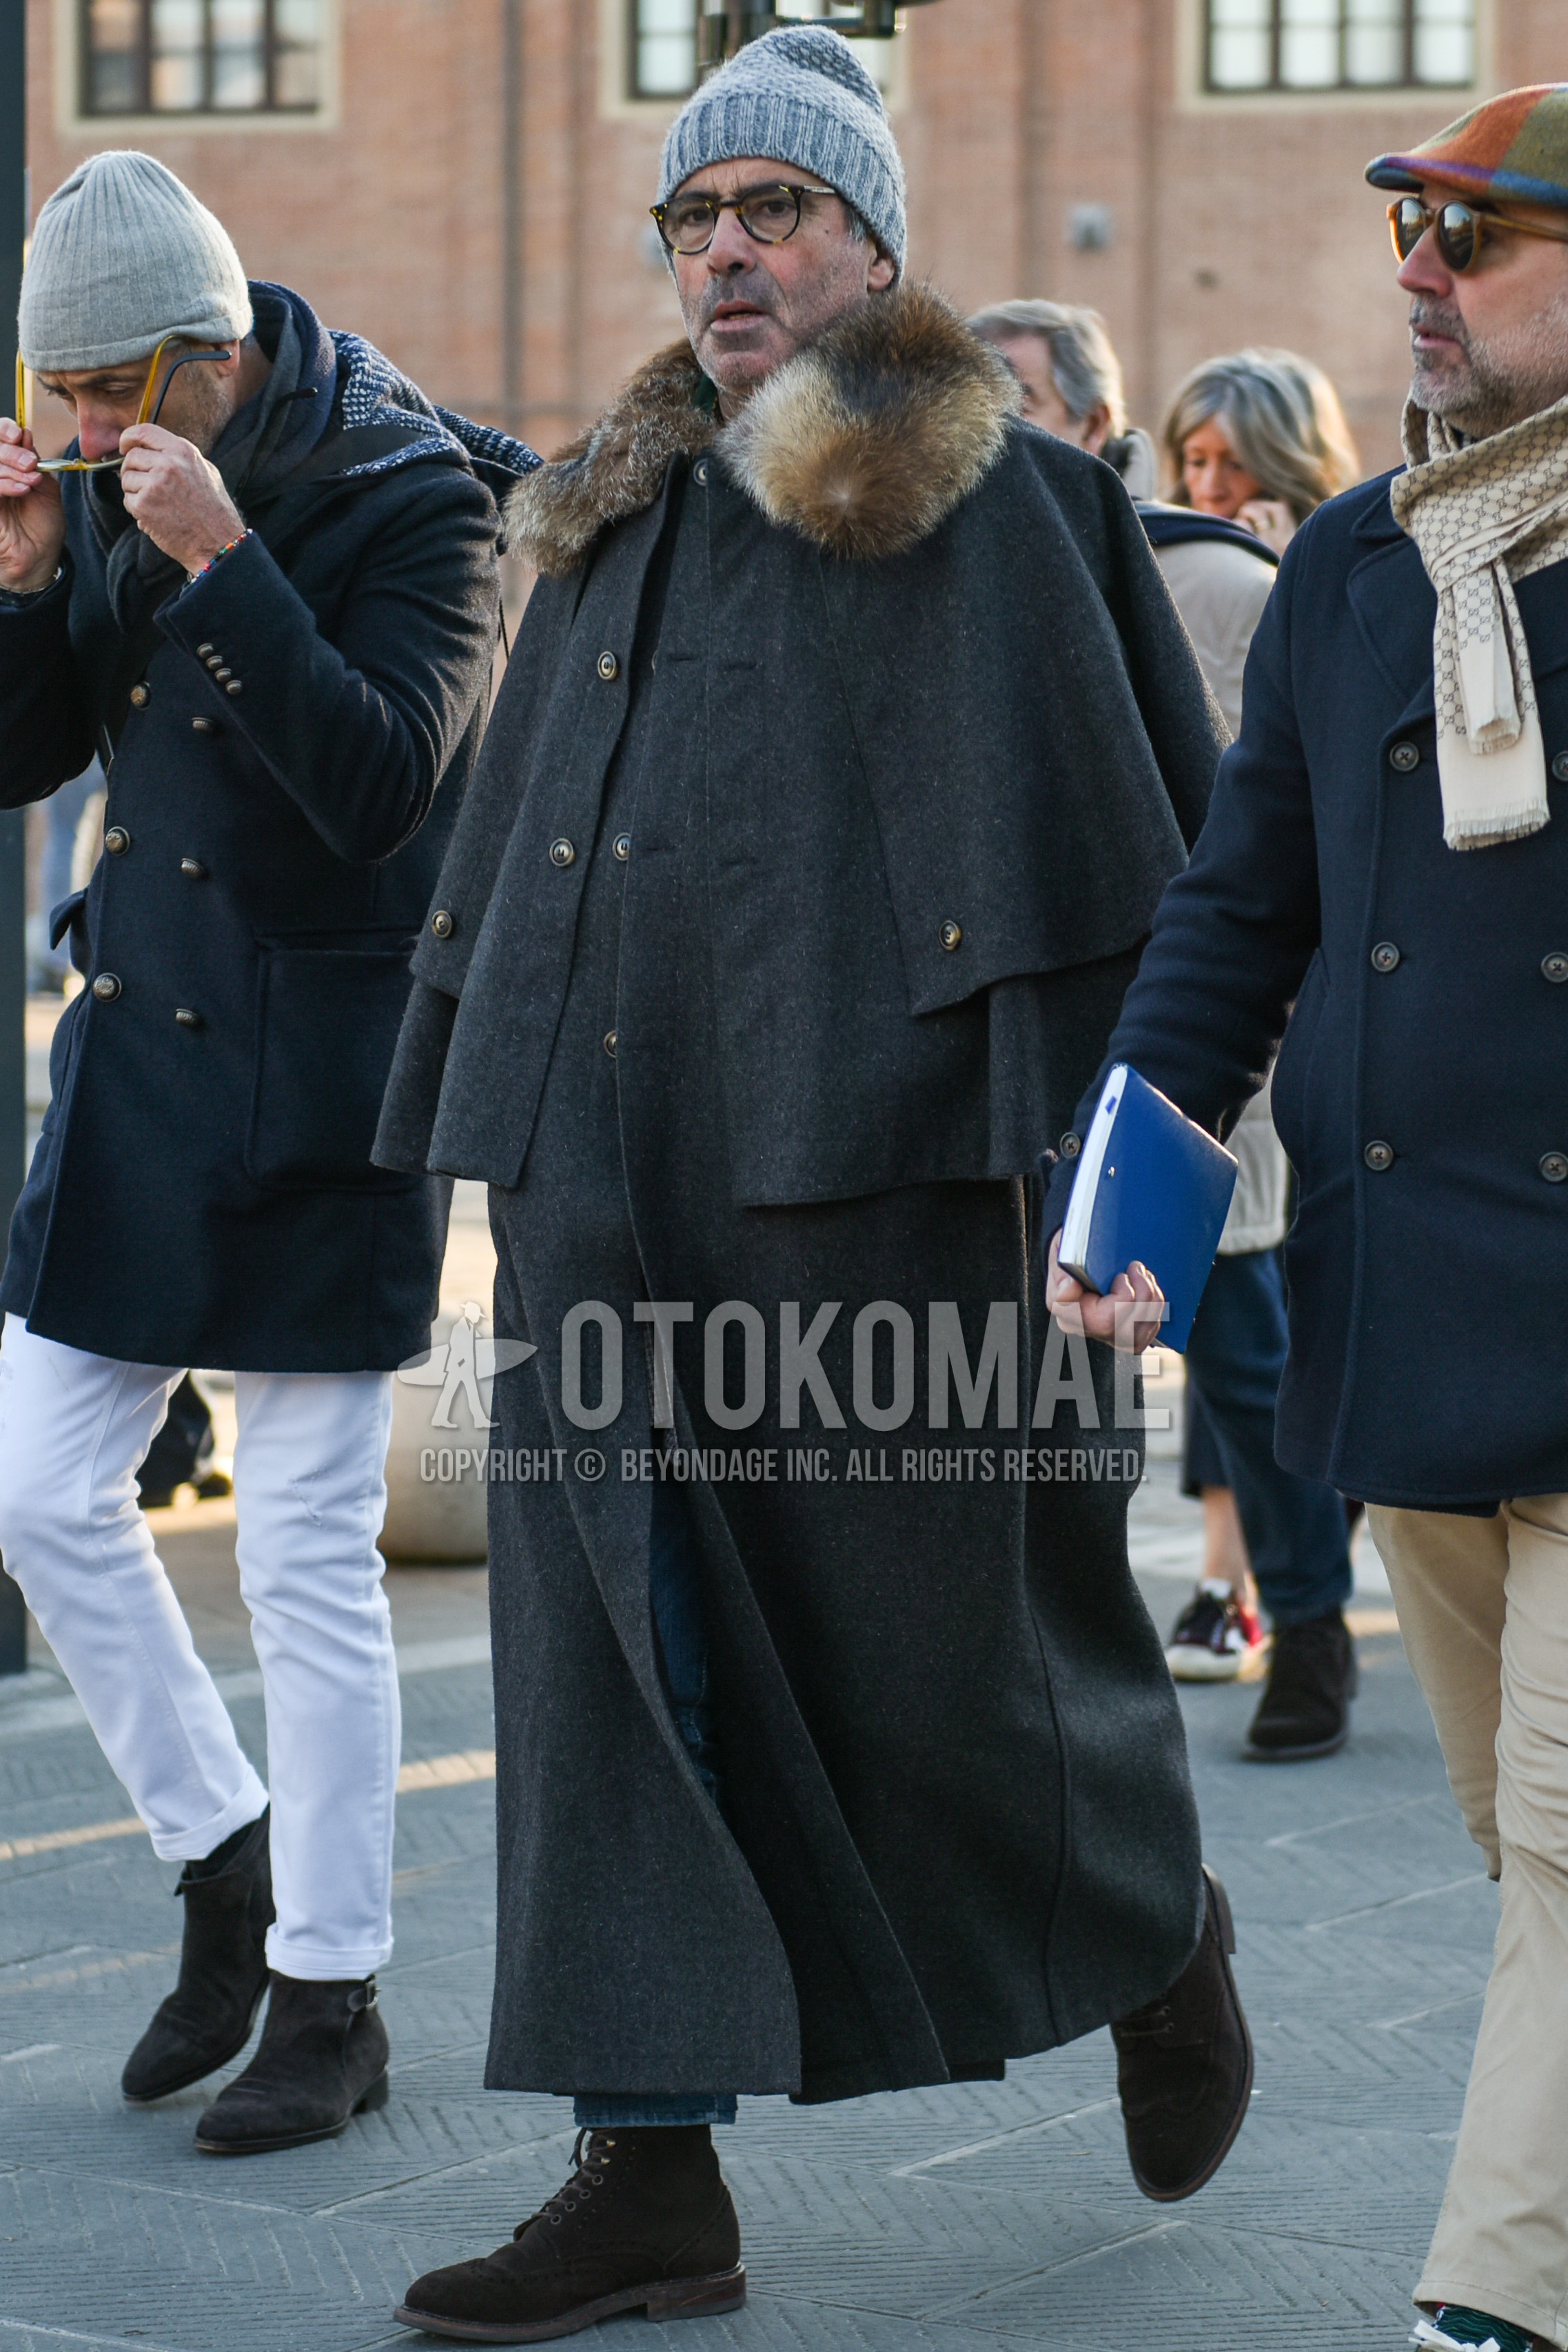 Men's autumn winter outfit with gray plain knit cap, brown tortoiseshell glasses, gray plain outerwear, gray plain denim/jeans, brown  boots.